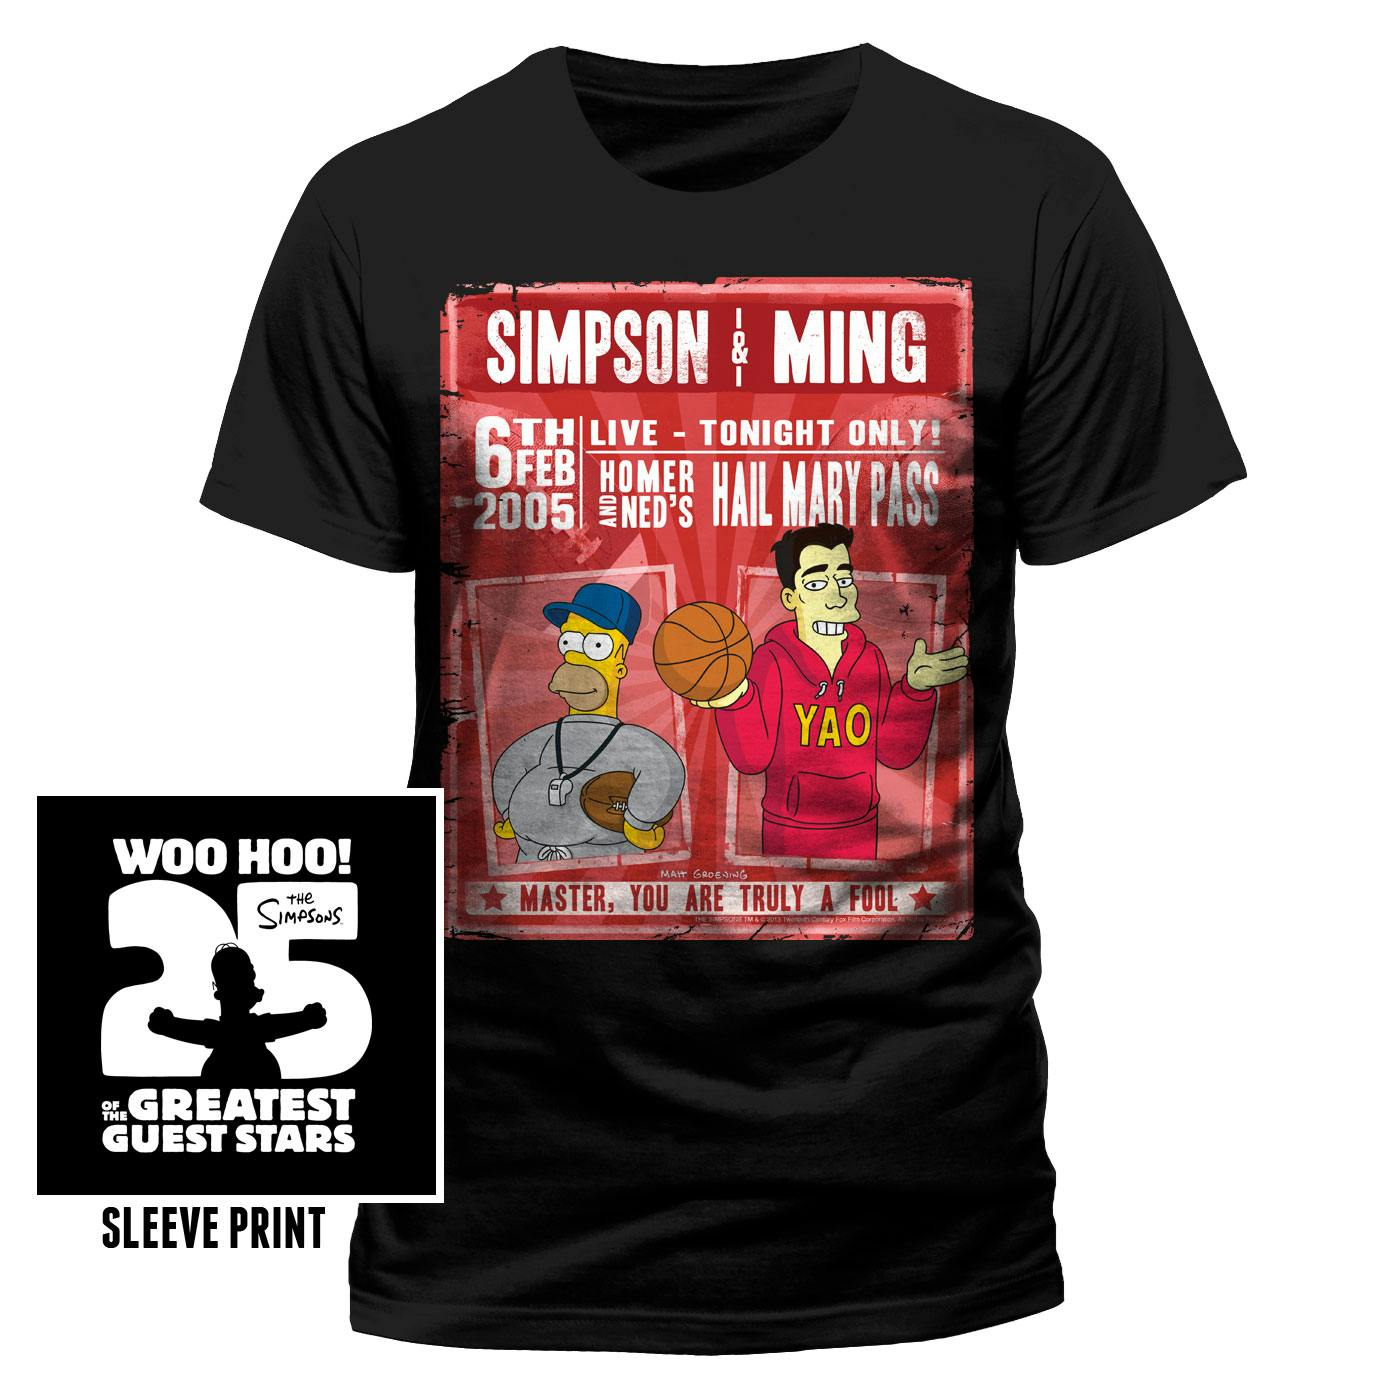 simpsons t-shirts